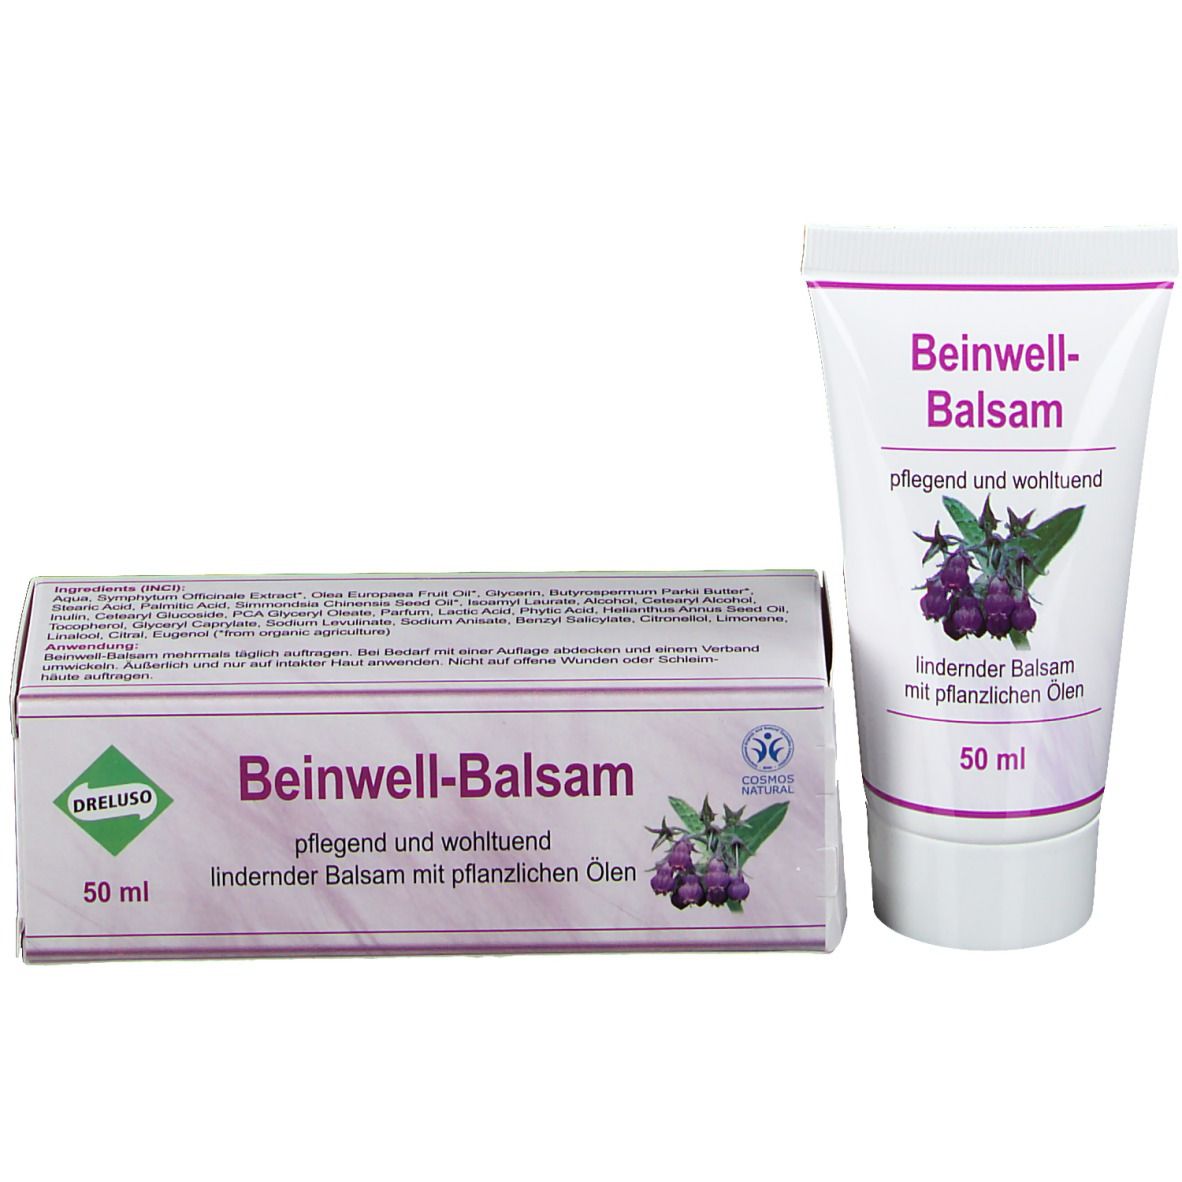 Beinwell-Balsam